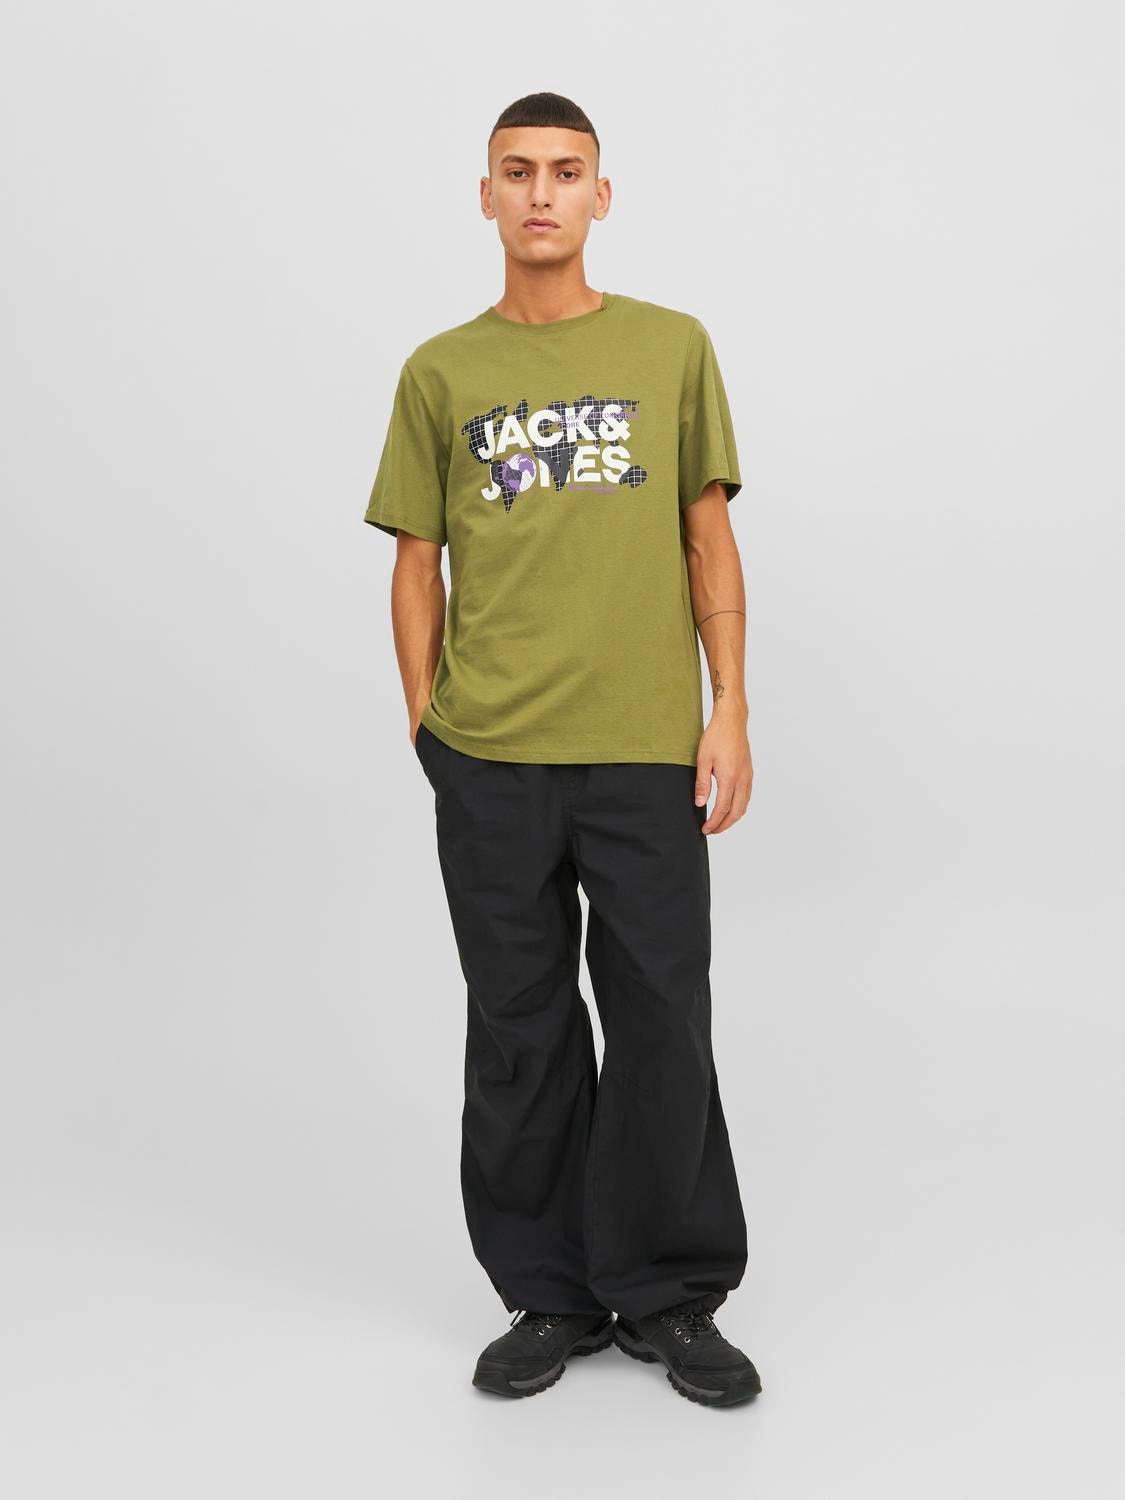 Jack & Jones Logo Crew neck T-shirt -Olive Branch - 12240276